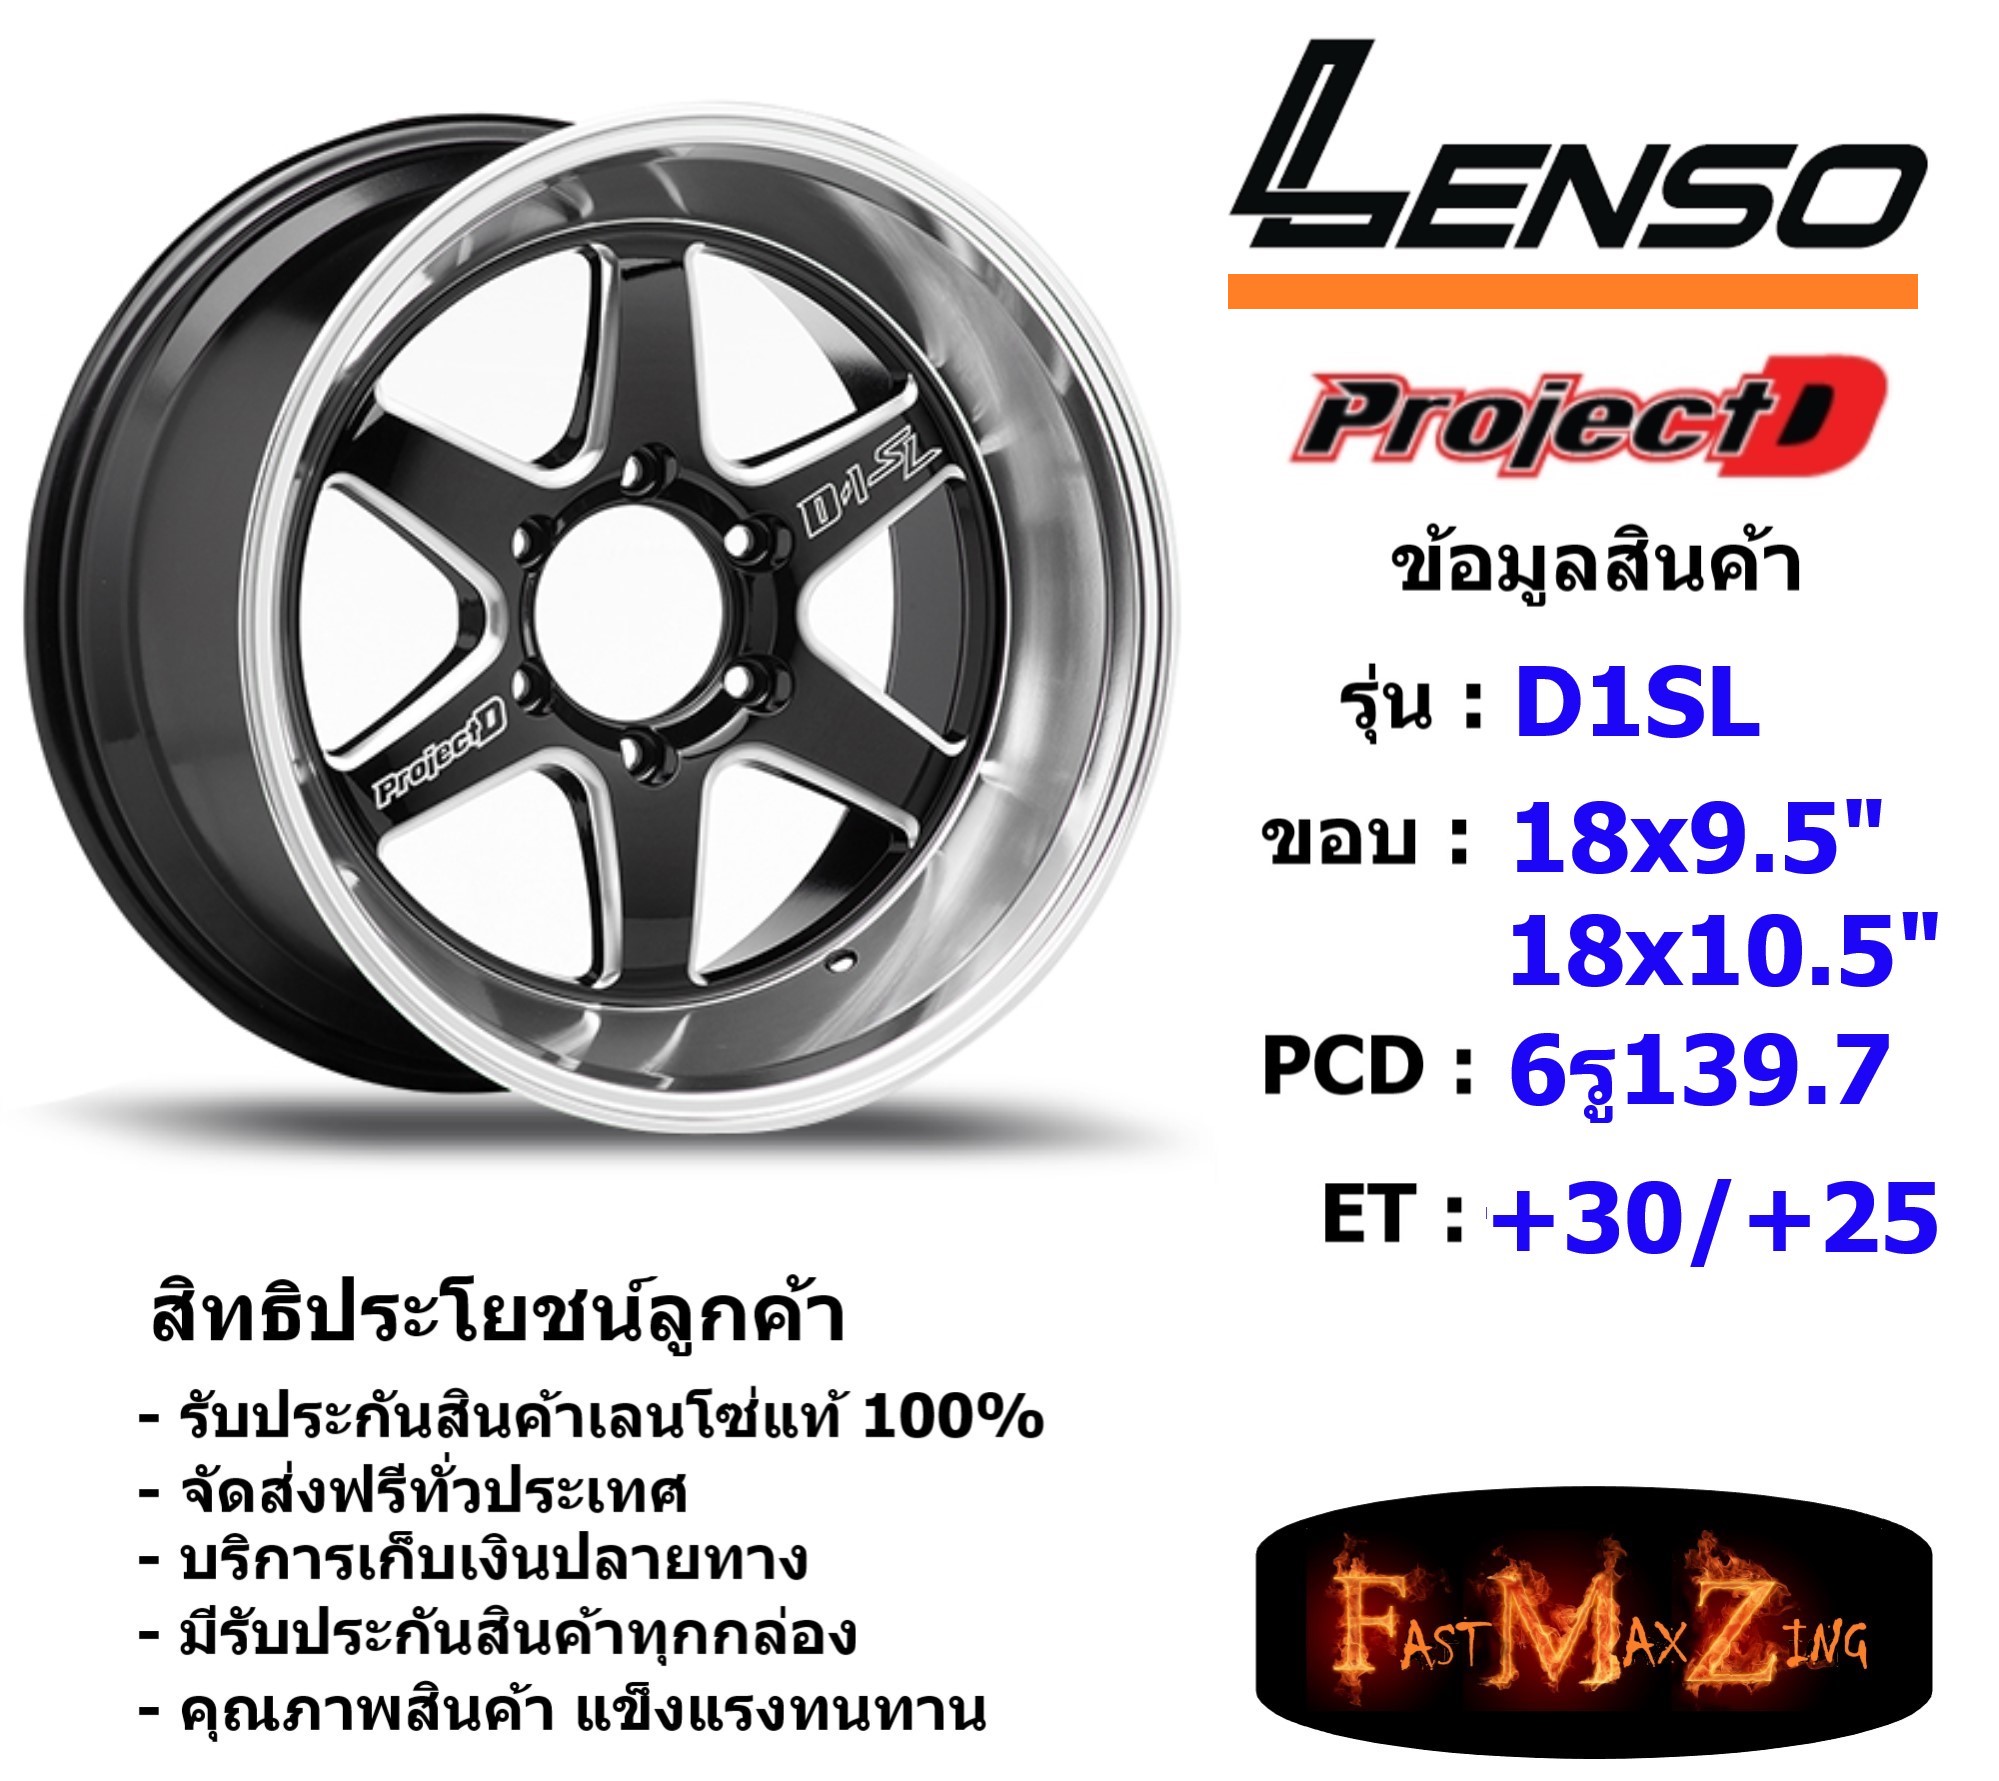 Lenso Wheel ProjectD D1SL ขอบ 18x9.5/10.5 6รู139.7 ET+25/+30 สีBKWMA แม็กเลนโซ่ ล้อแม็ก เลนโซ่ lenso18 แม็กรถยนต์ขอบ18